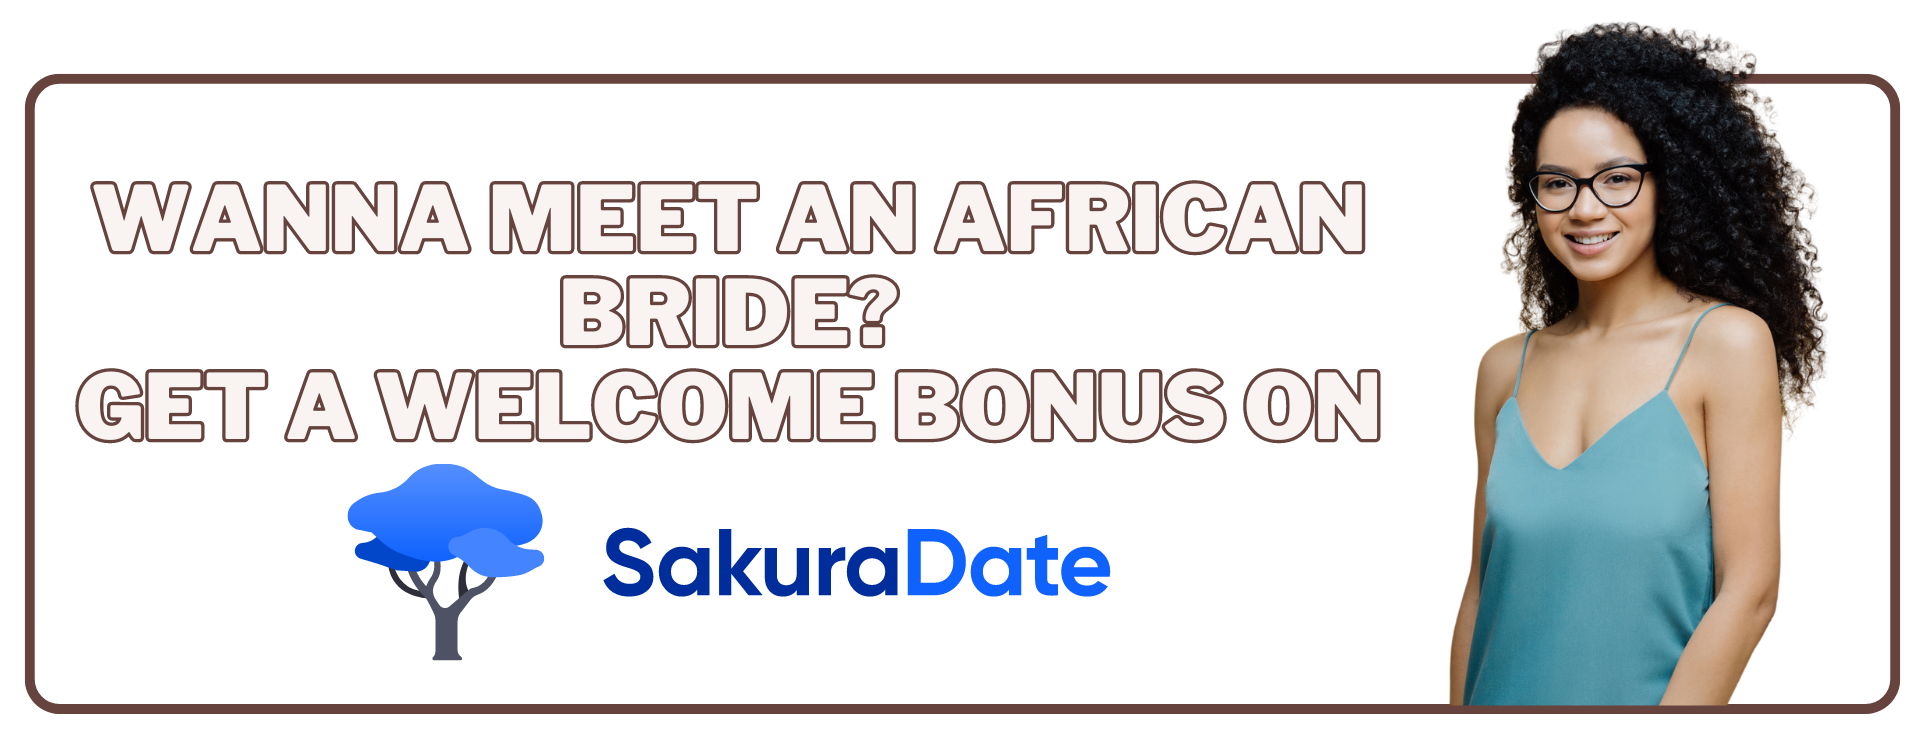 African mail order brides site